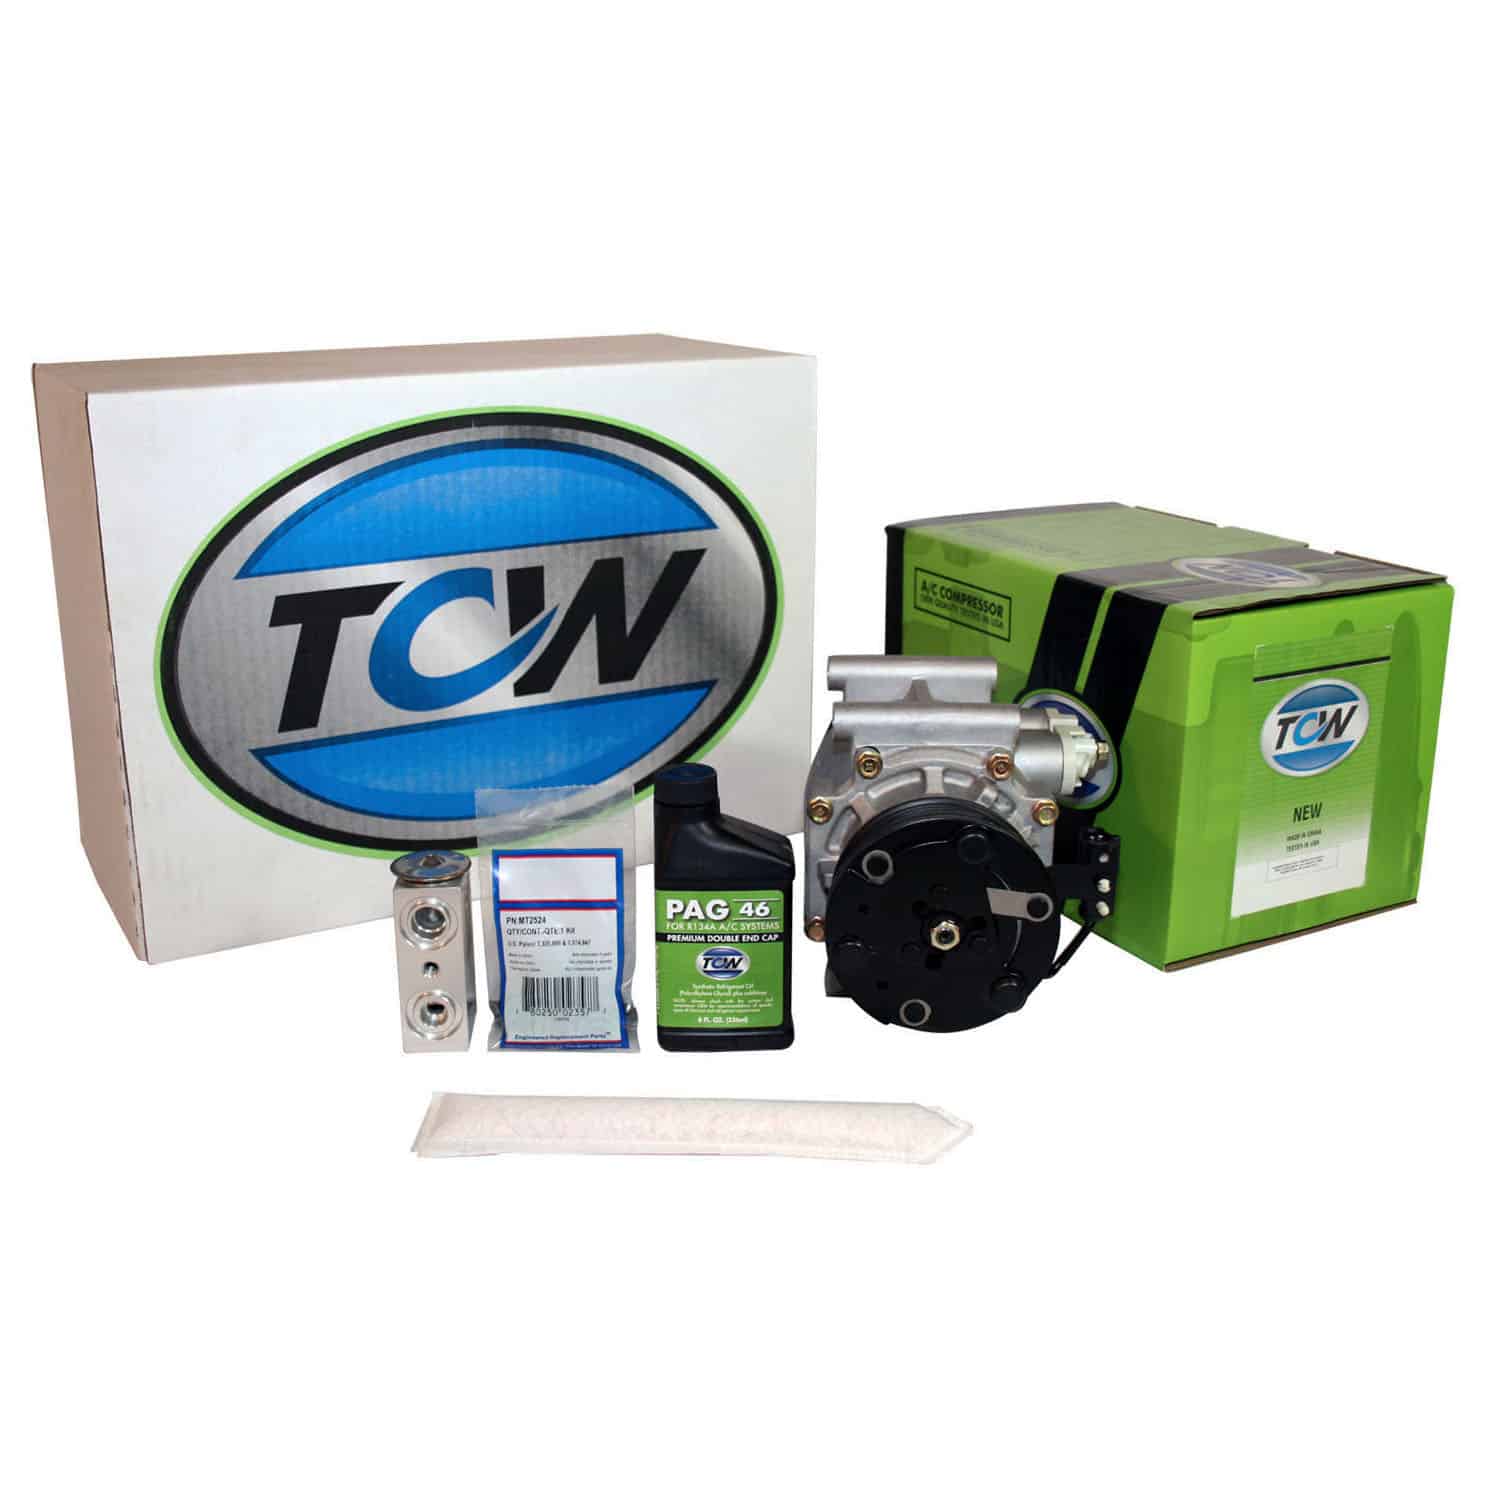 TCW Vehicle A/C Kit K1000251N New Product Image field_60b6a13a6e67c